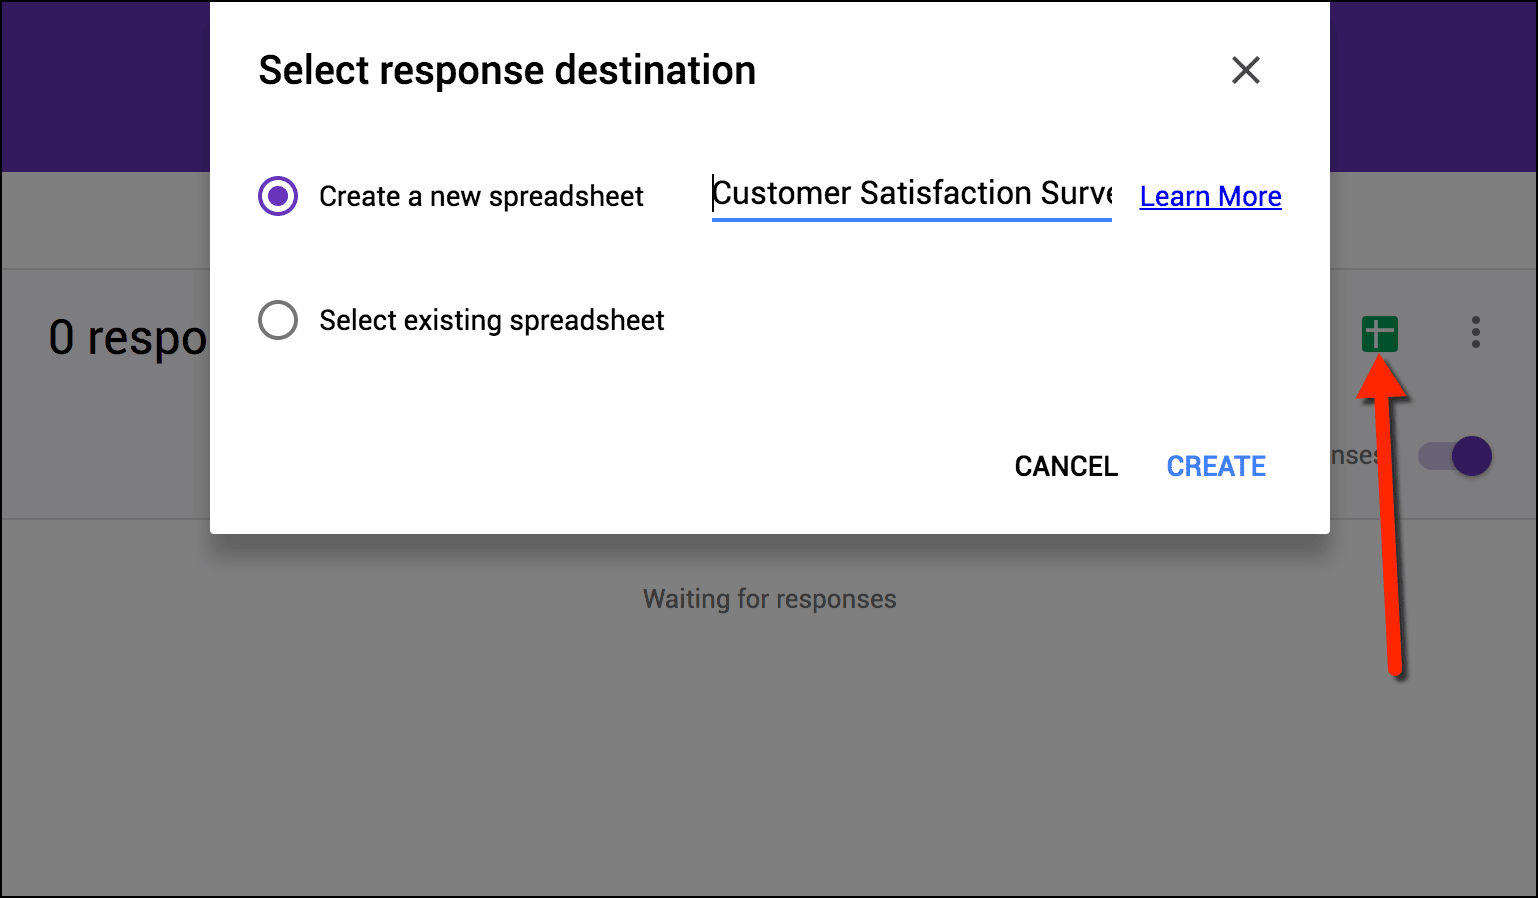 Image result for select response destination google form